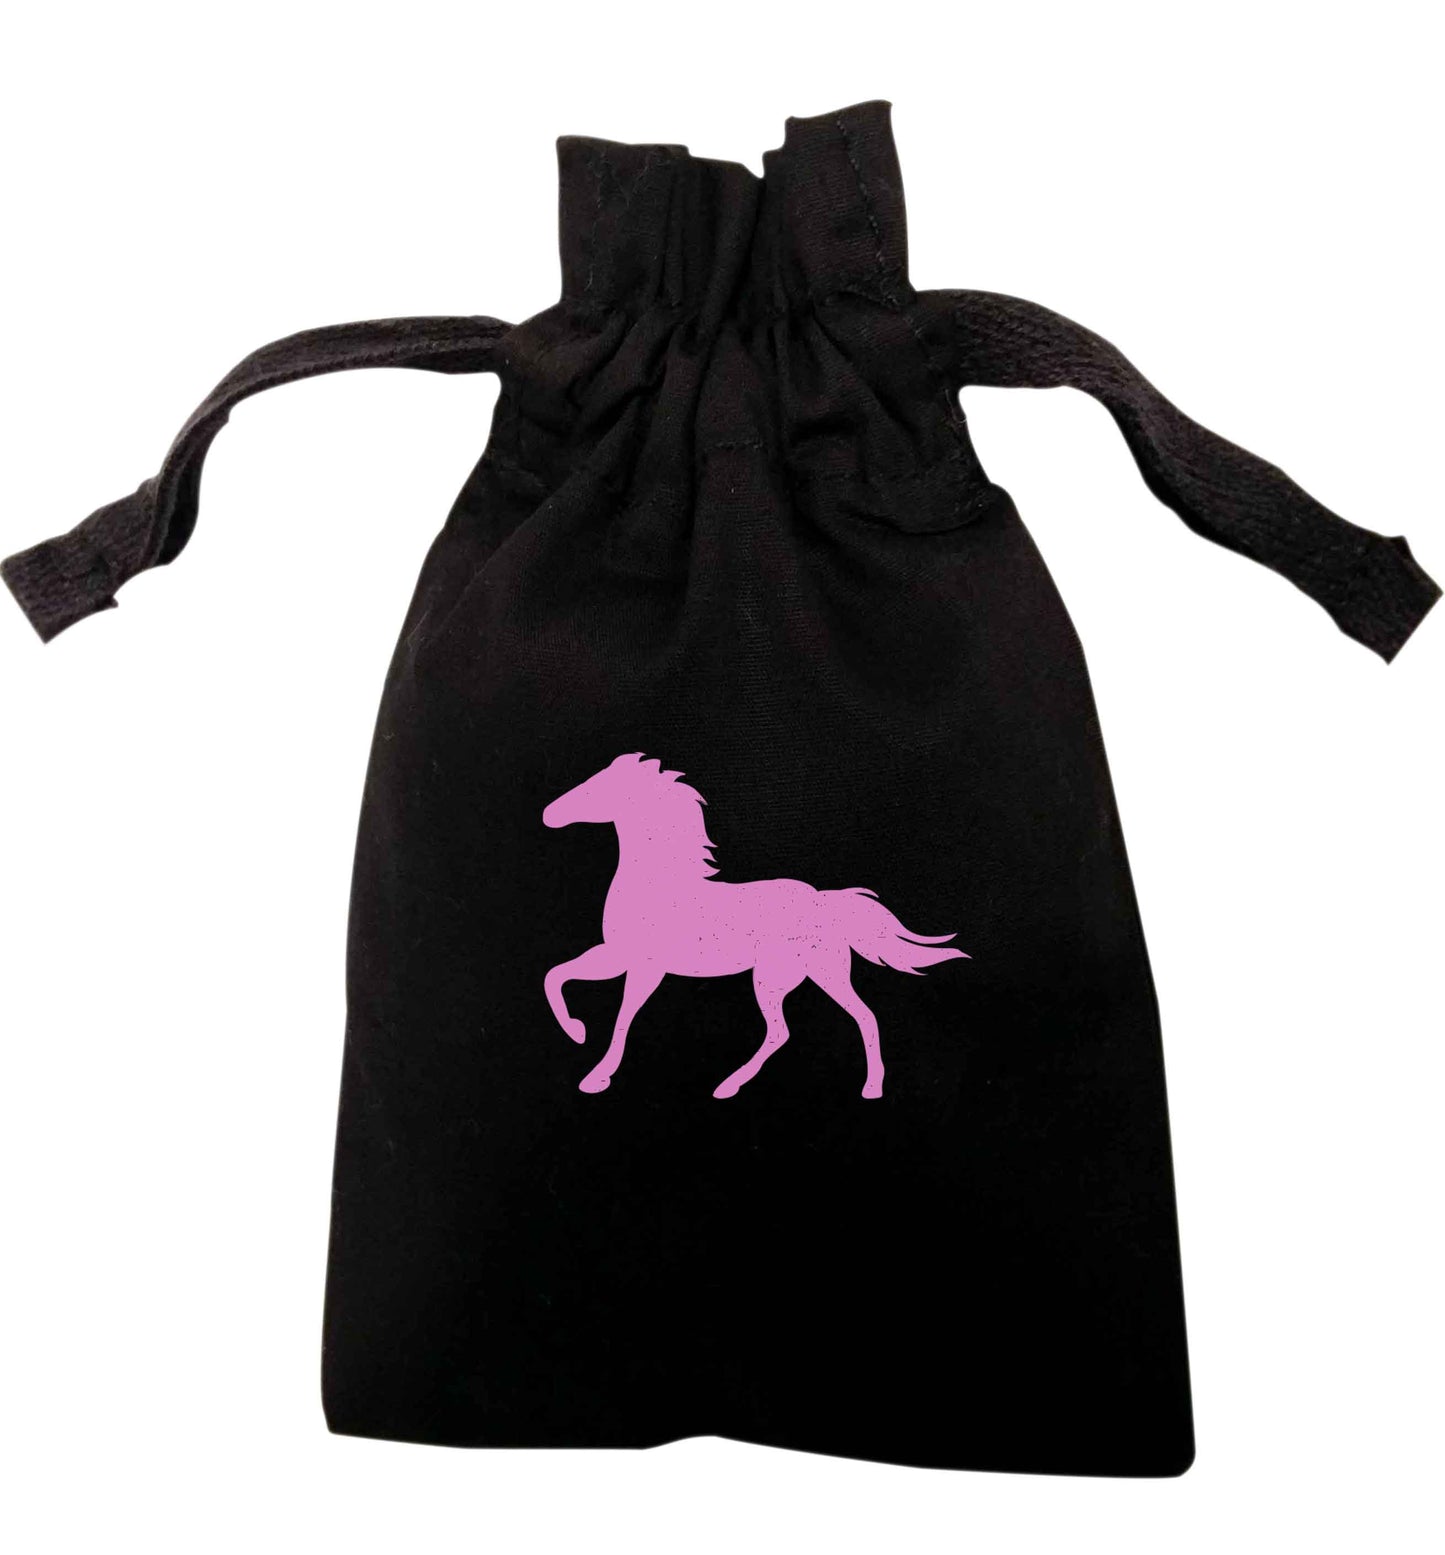 Pink horse | XS - L | Pouch / Drawstring bag / Sack | Organic Cotton | Bulk discounts available!